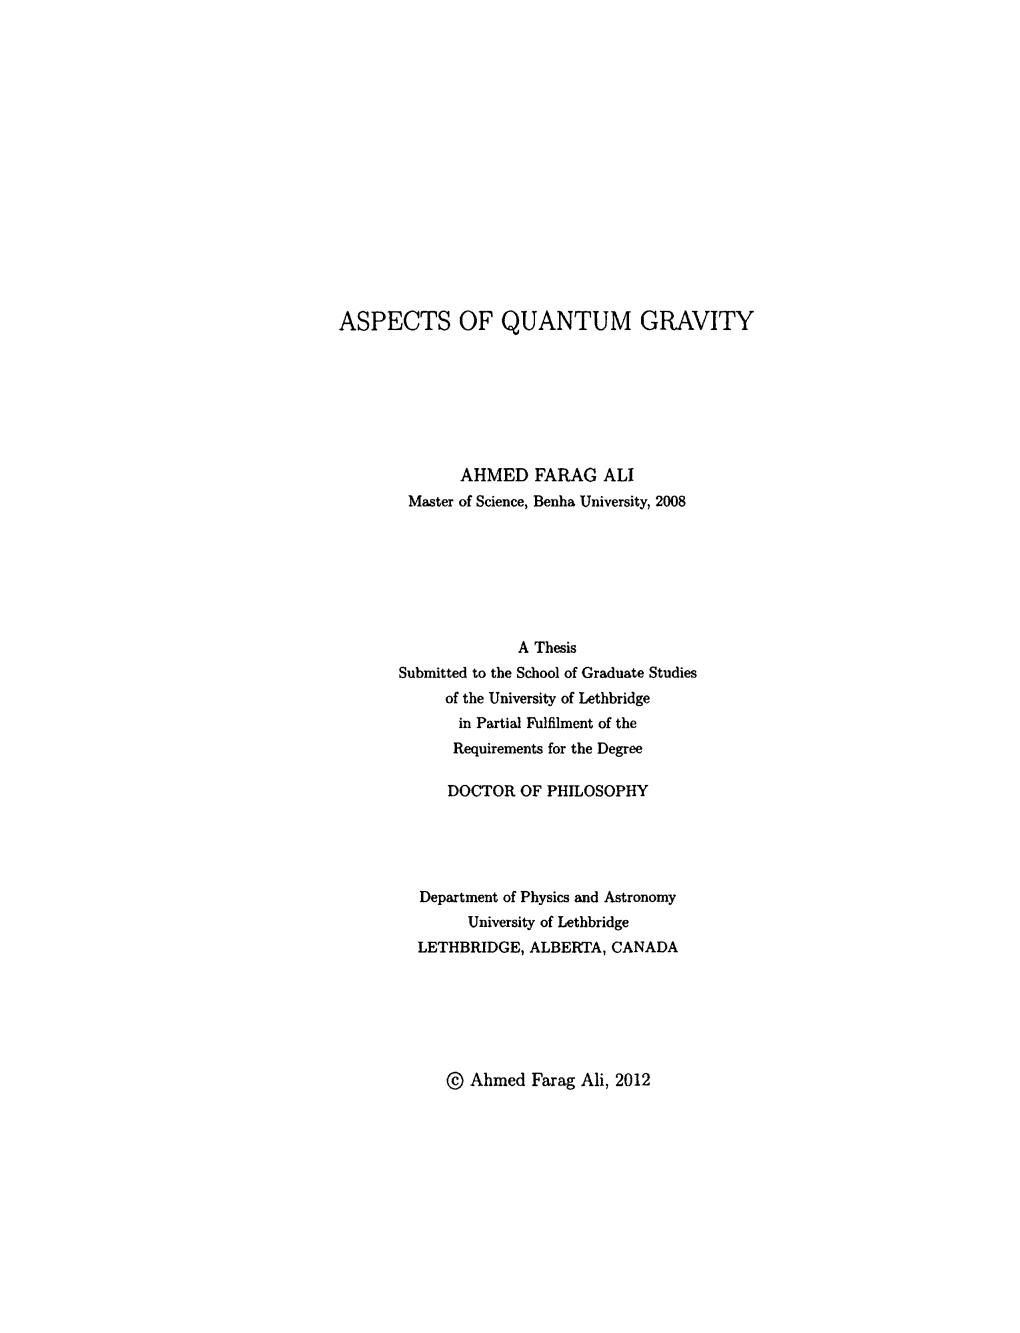 Aspects of Quantum Gravity